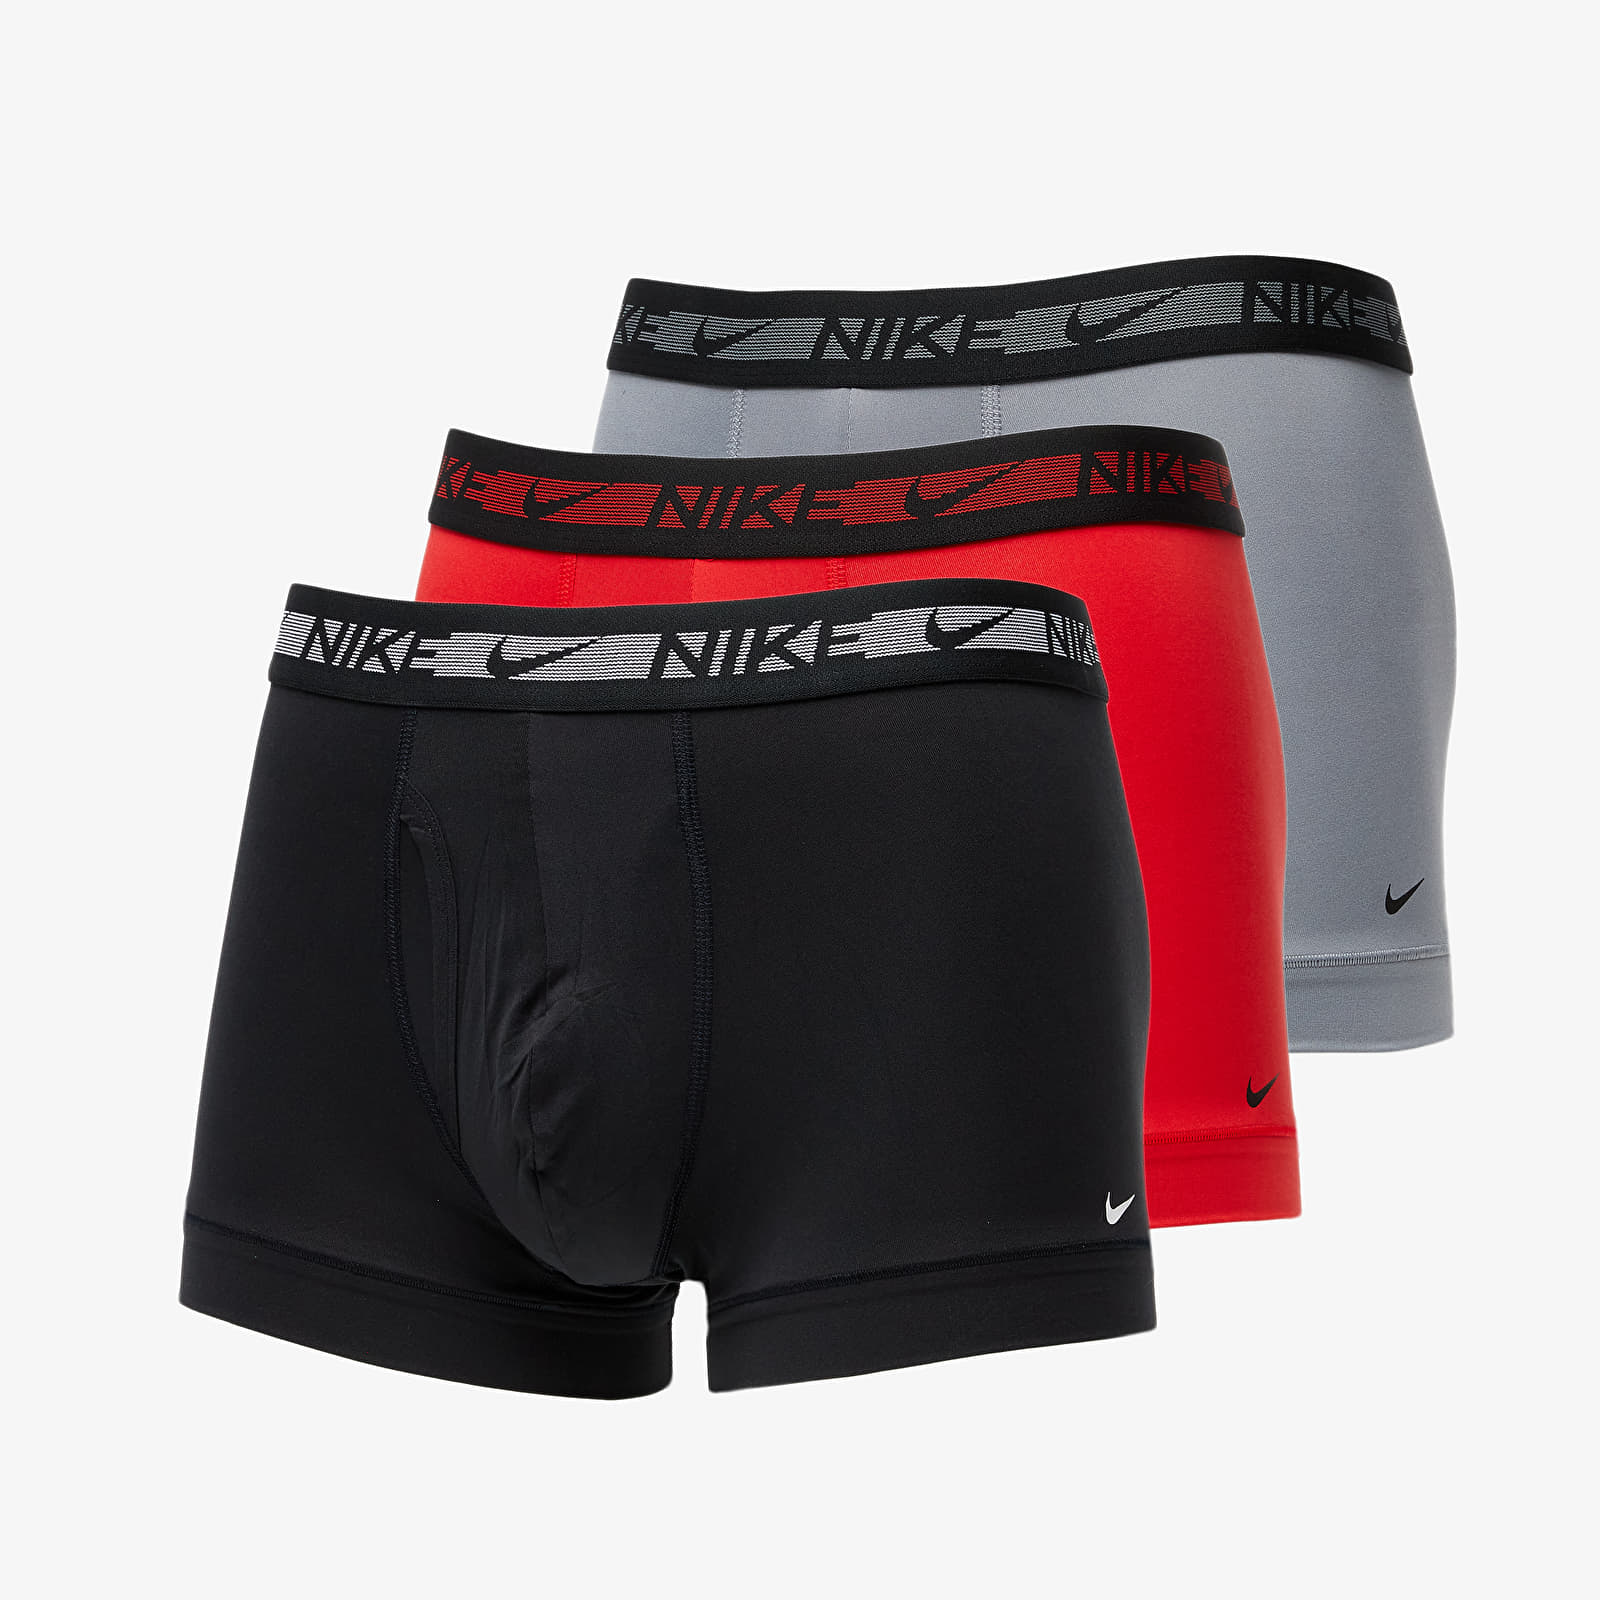 Boxer shorts Nike 3 Pack Trunks University Red/ Cool Grey/ Black